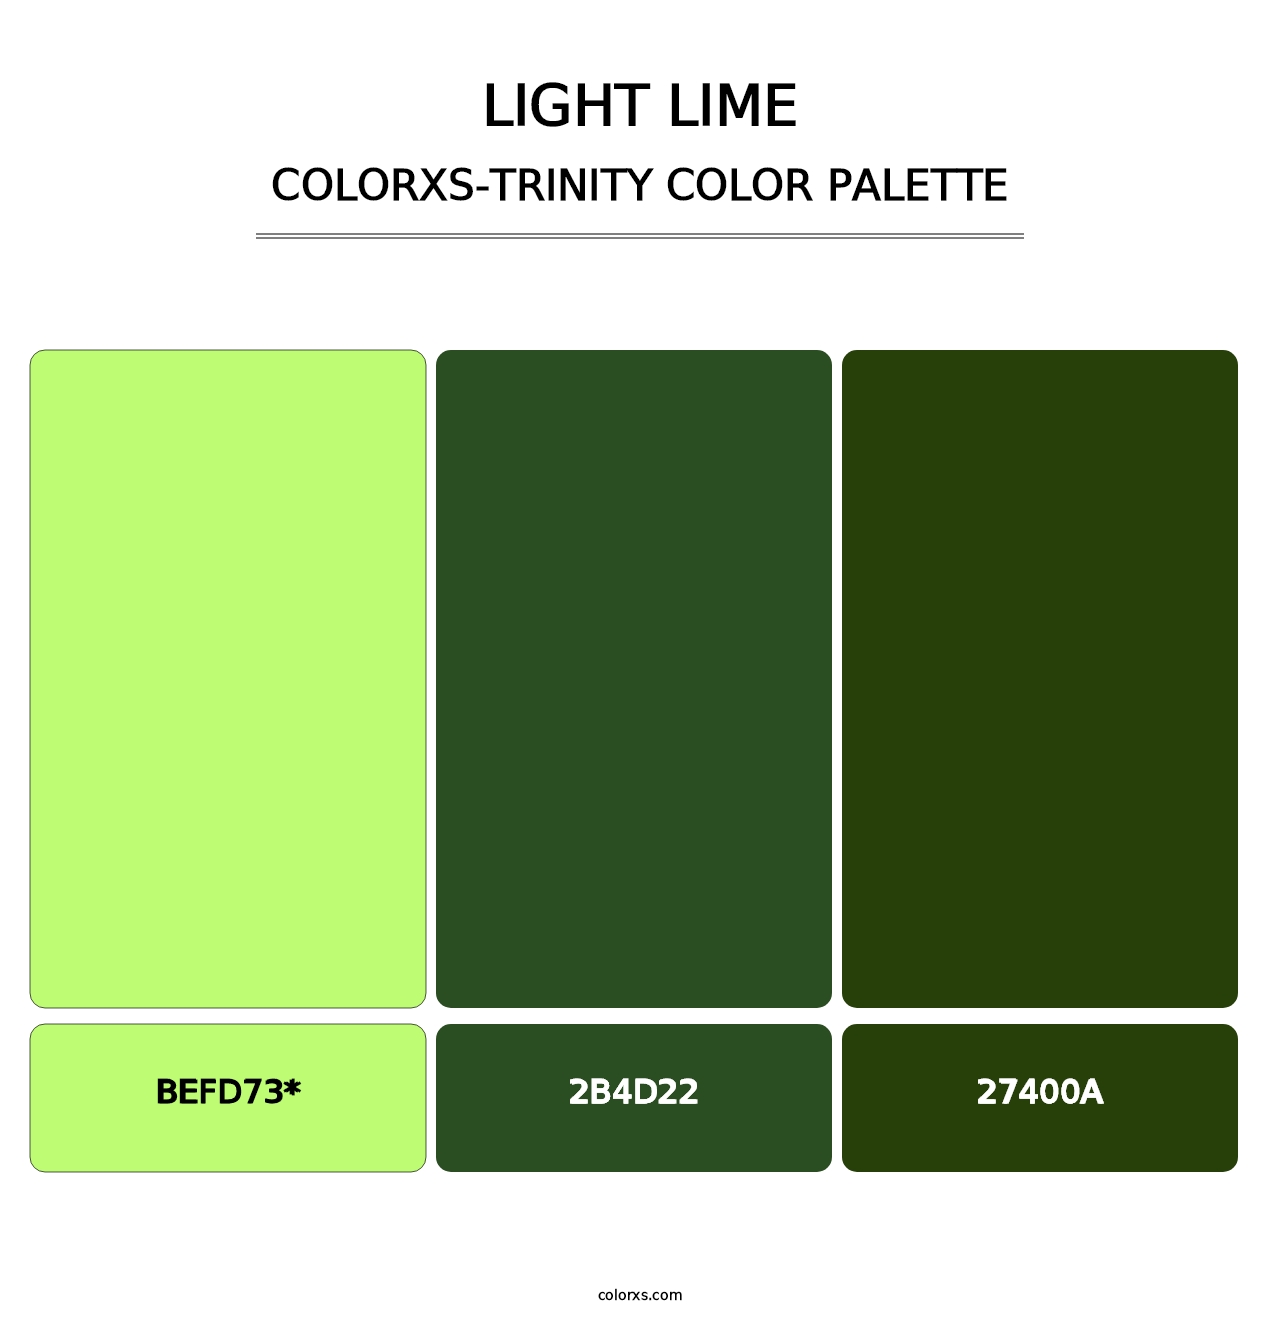 Light Lime - Colorxs Trinity Palette